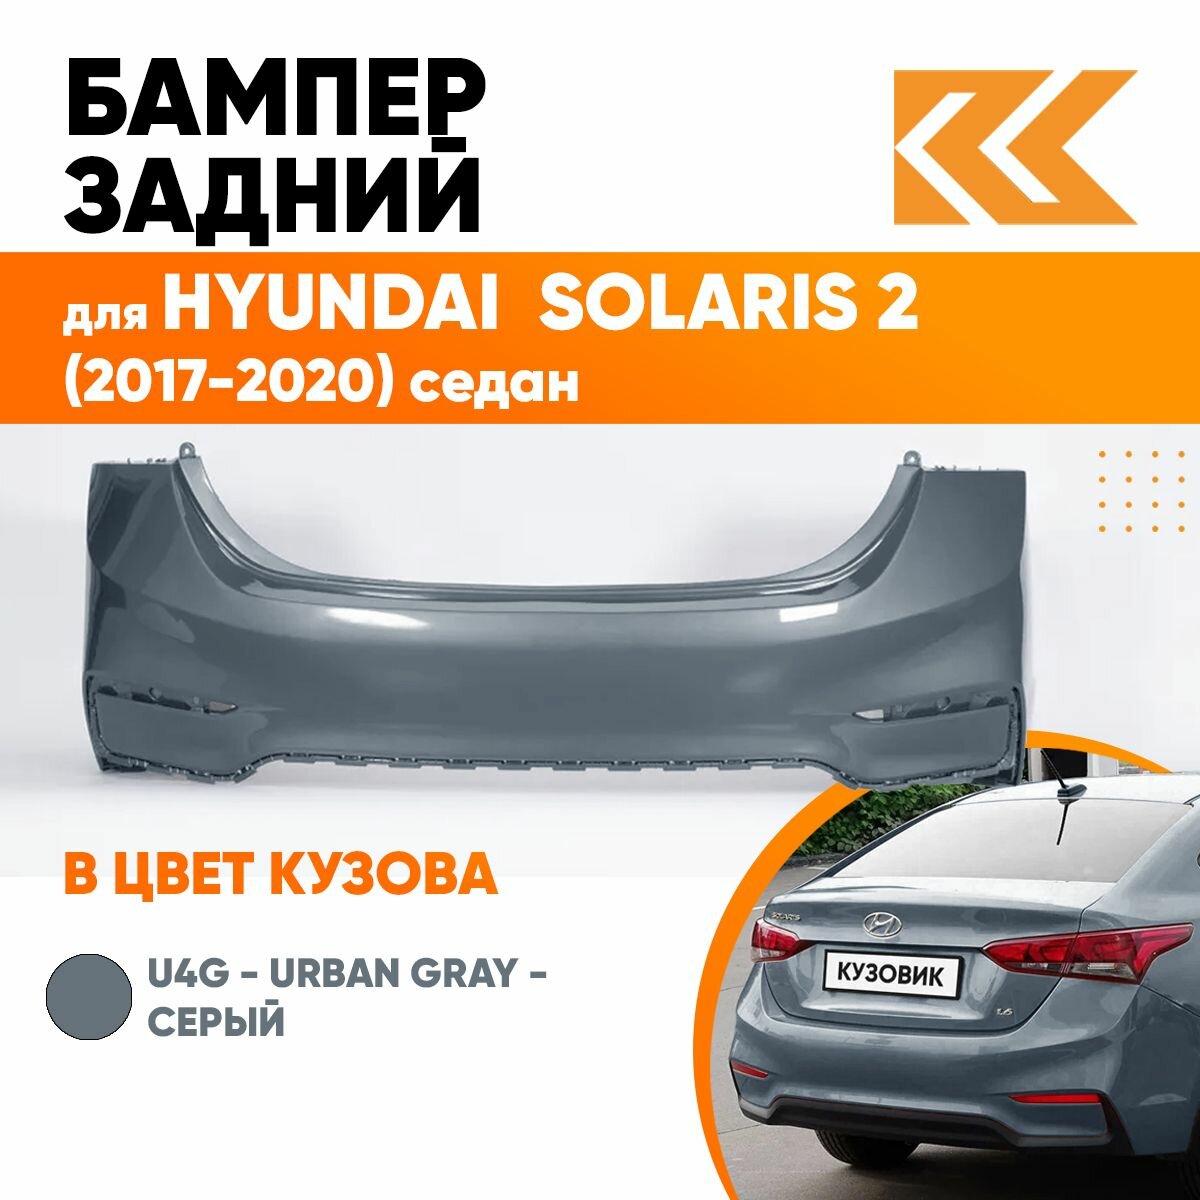 Бампер задний в цвет кузова Hyundai Solaris 2 Хендай Солярис MZH - PHANTOM BLACK - Чёрный